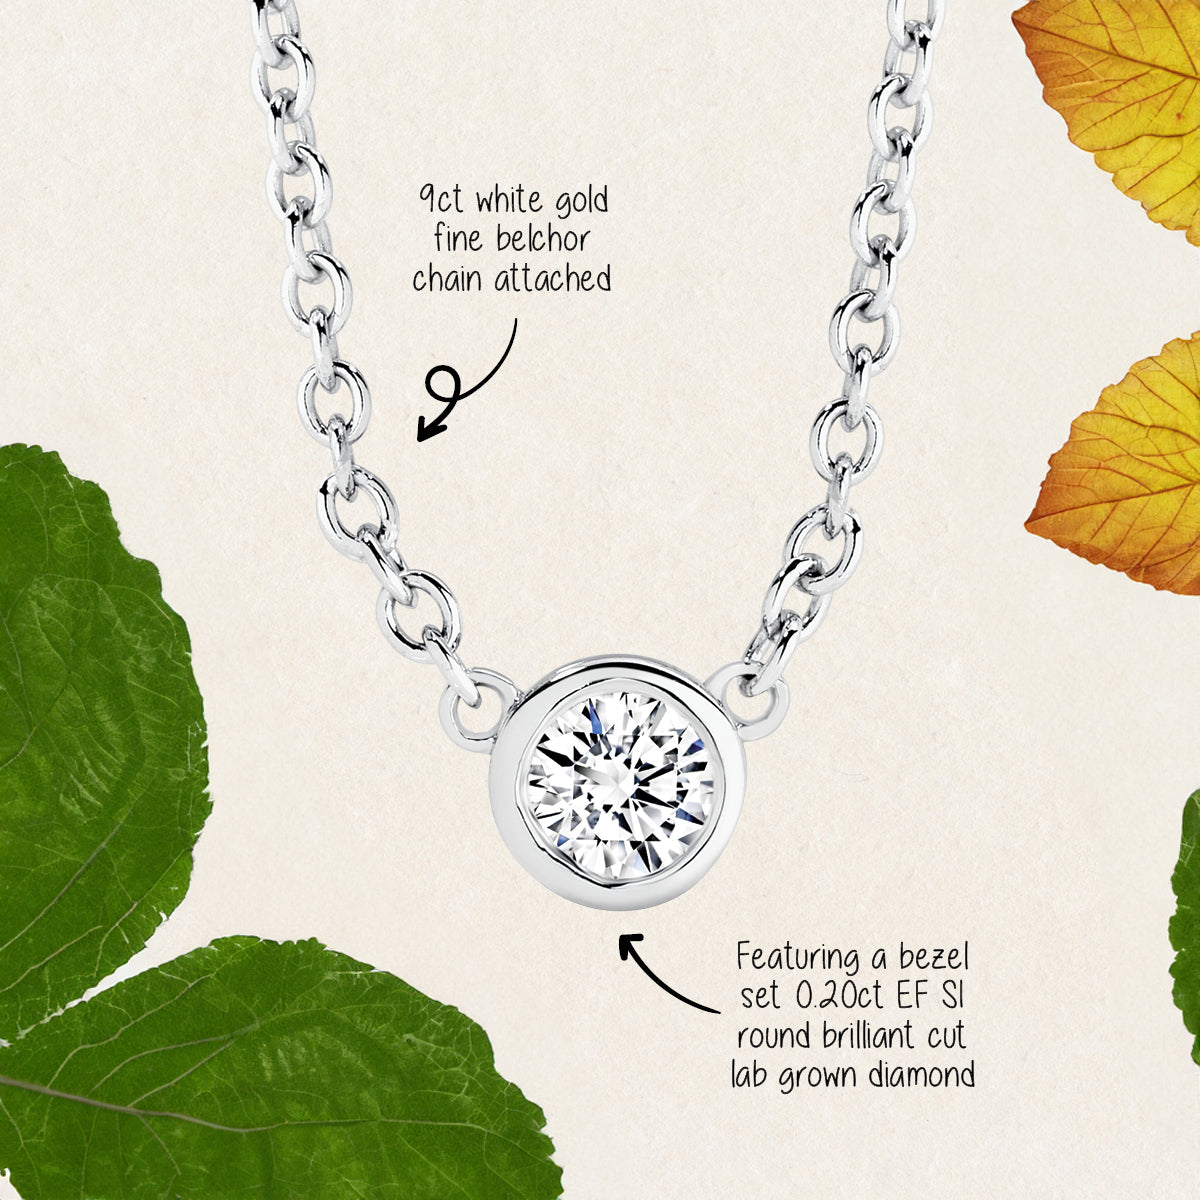 a bezel set 0.20ct EF SI round brilliant cut lab grown diamond necklace by greenhouse diamonds